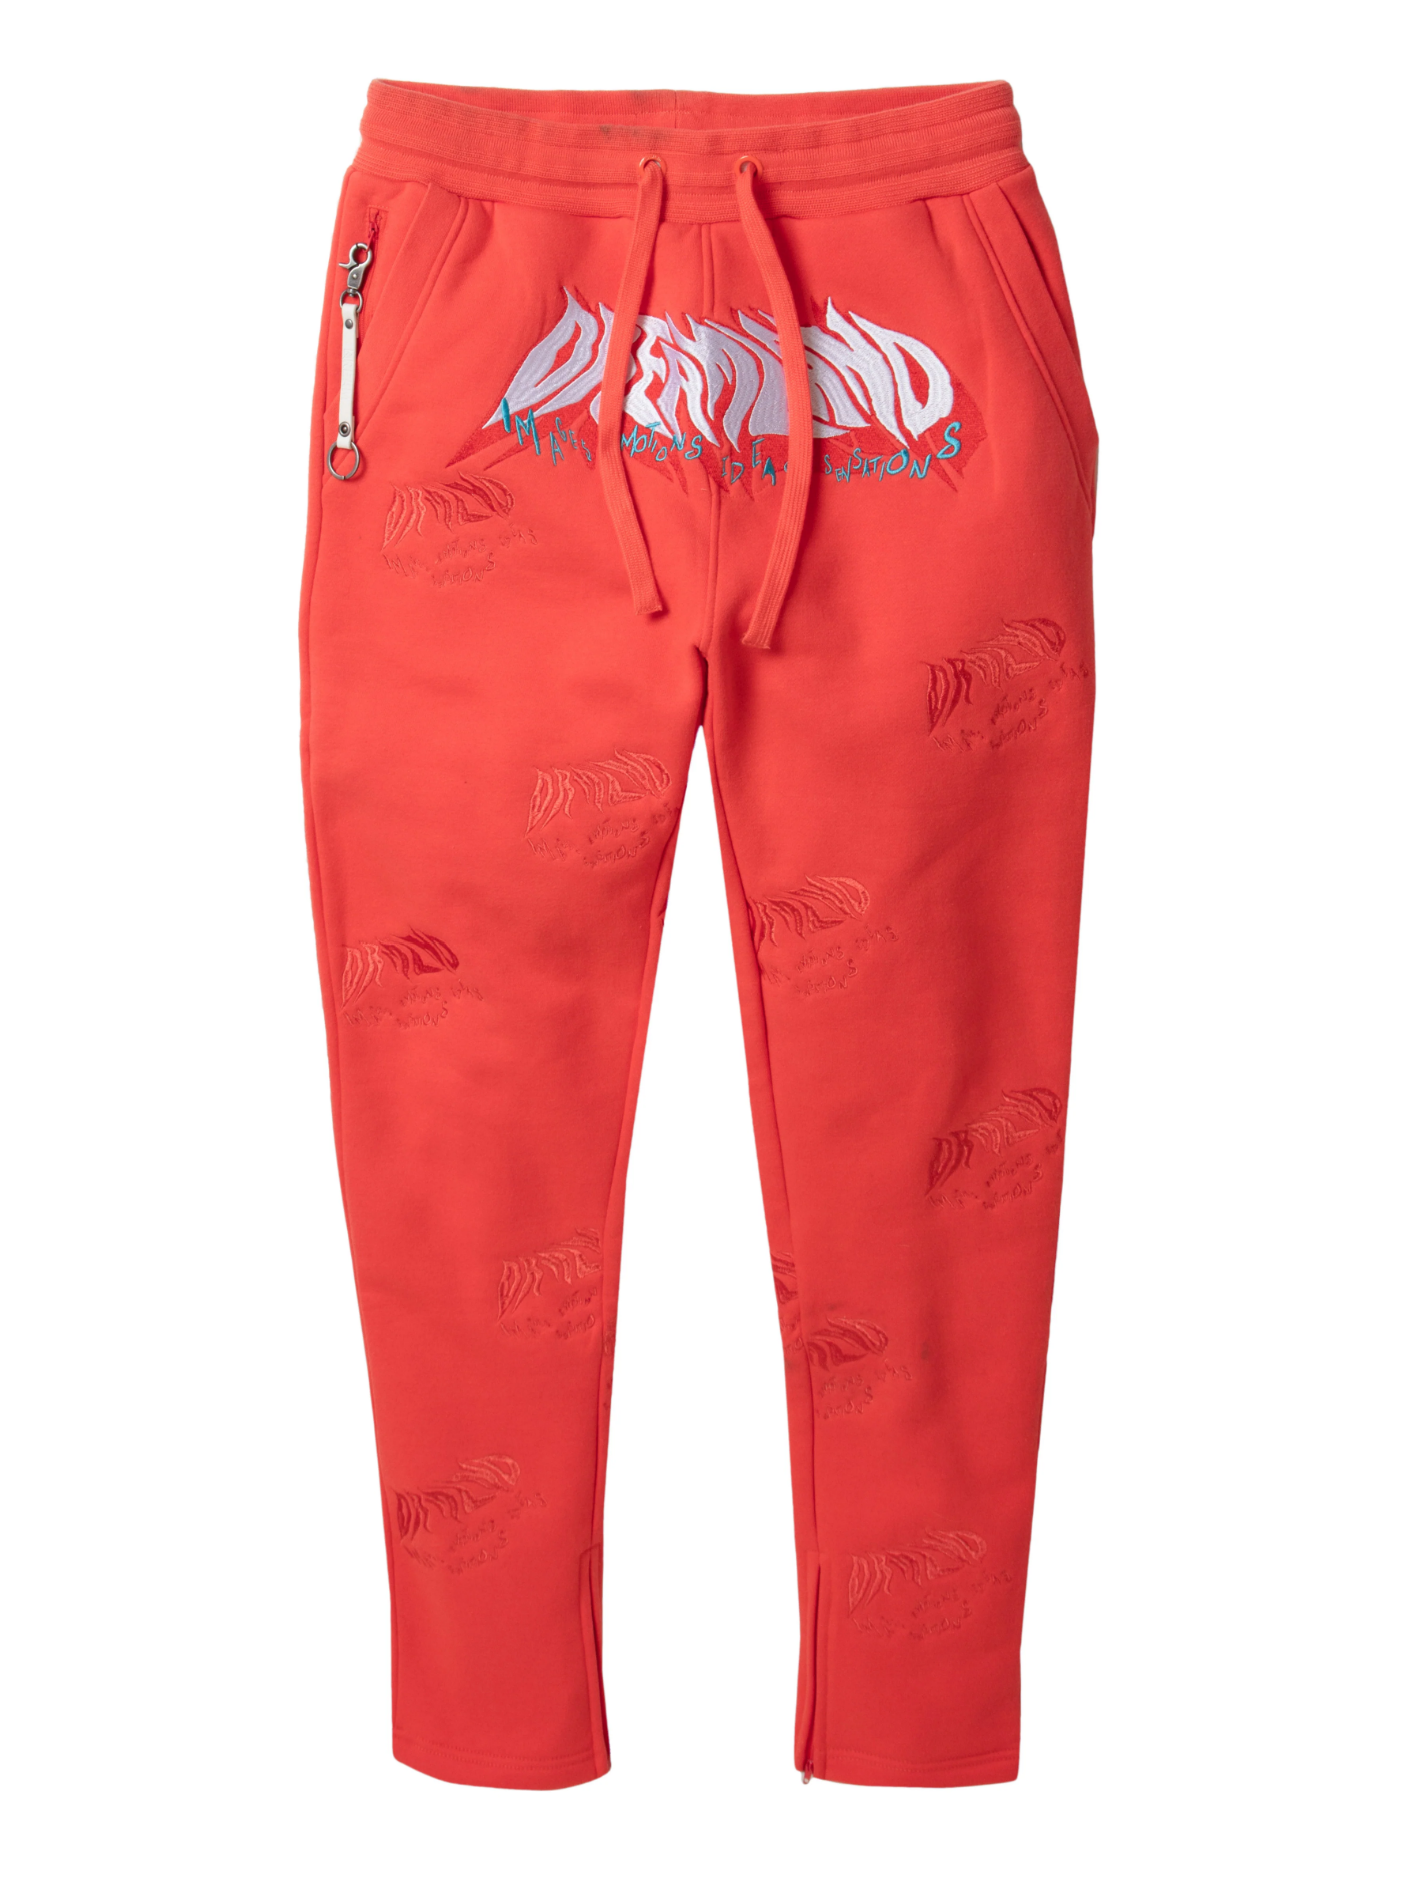 Wholesale Women's Fleece Jogger Sweatpants - Red